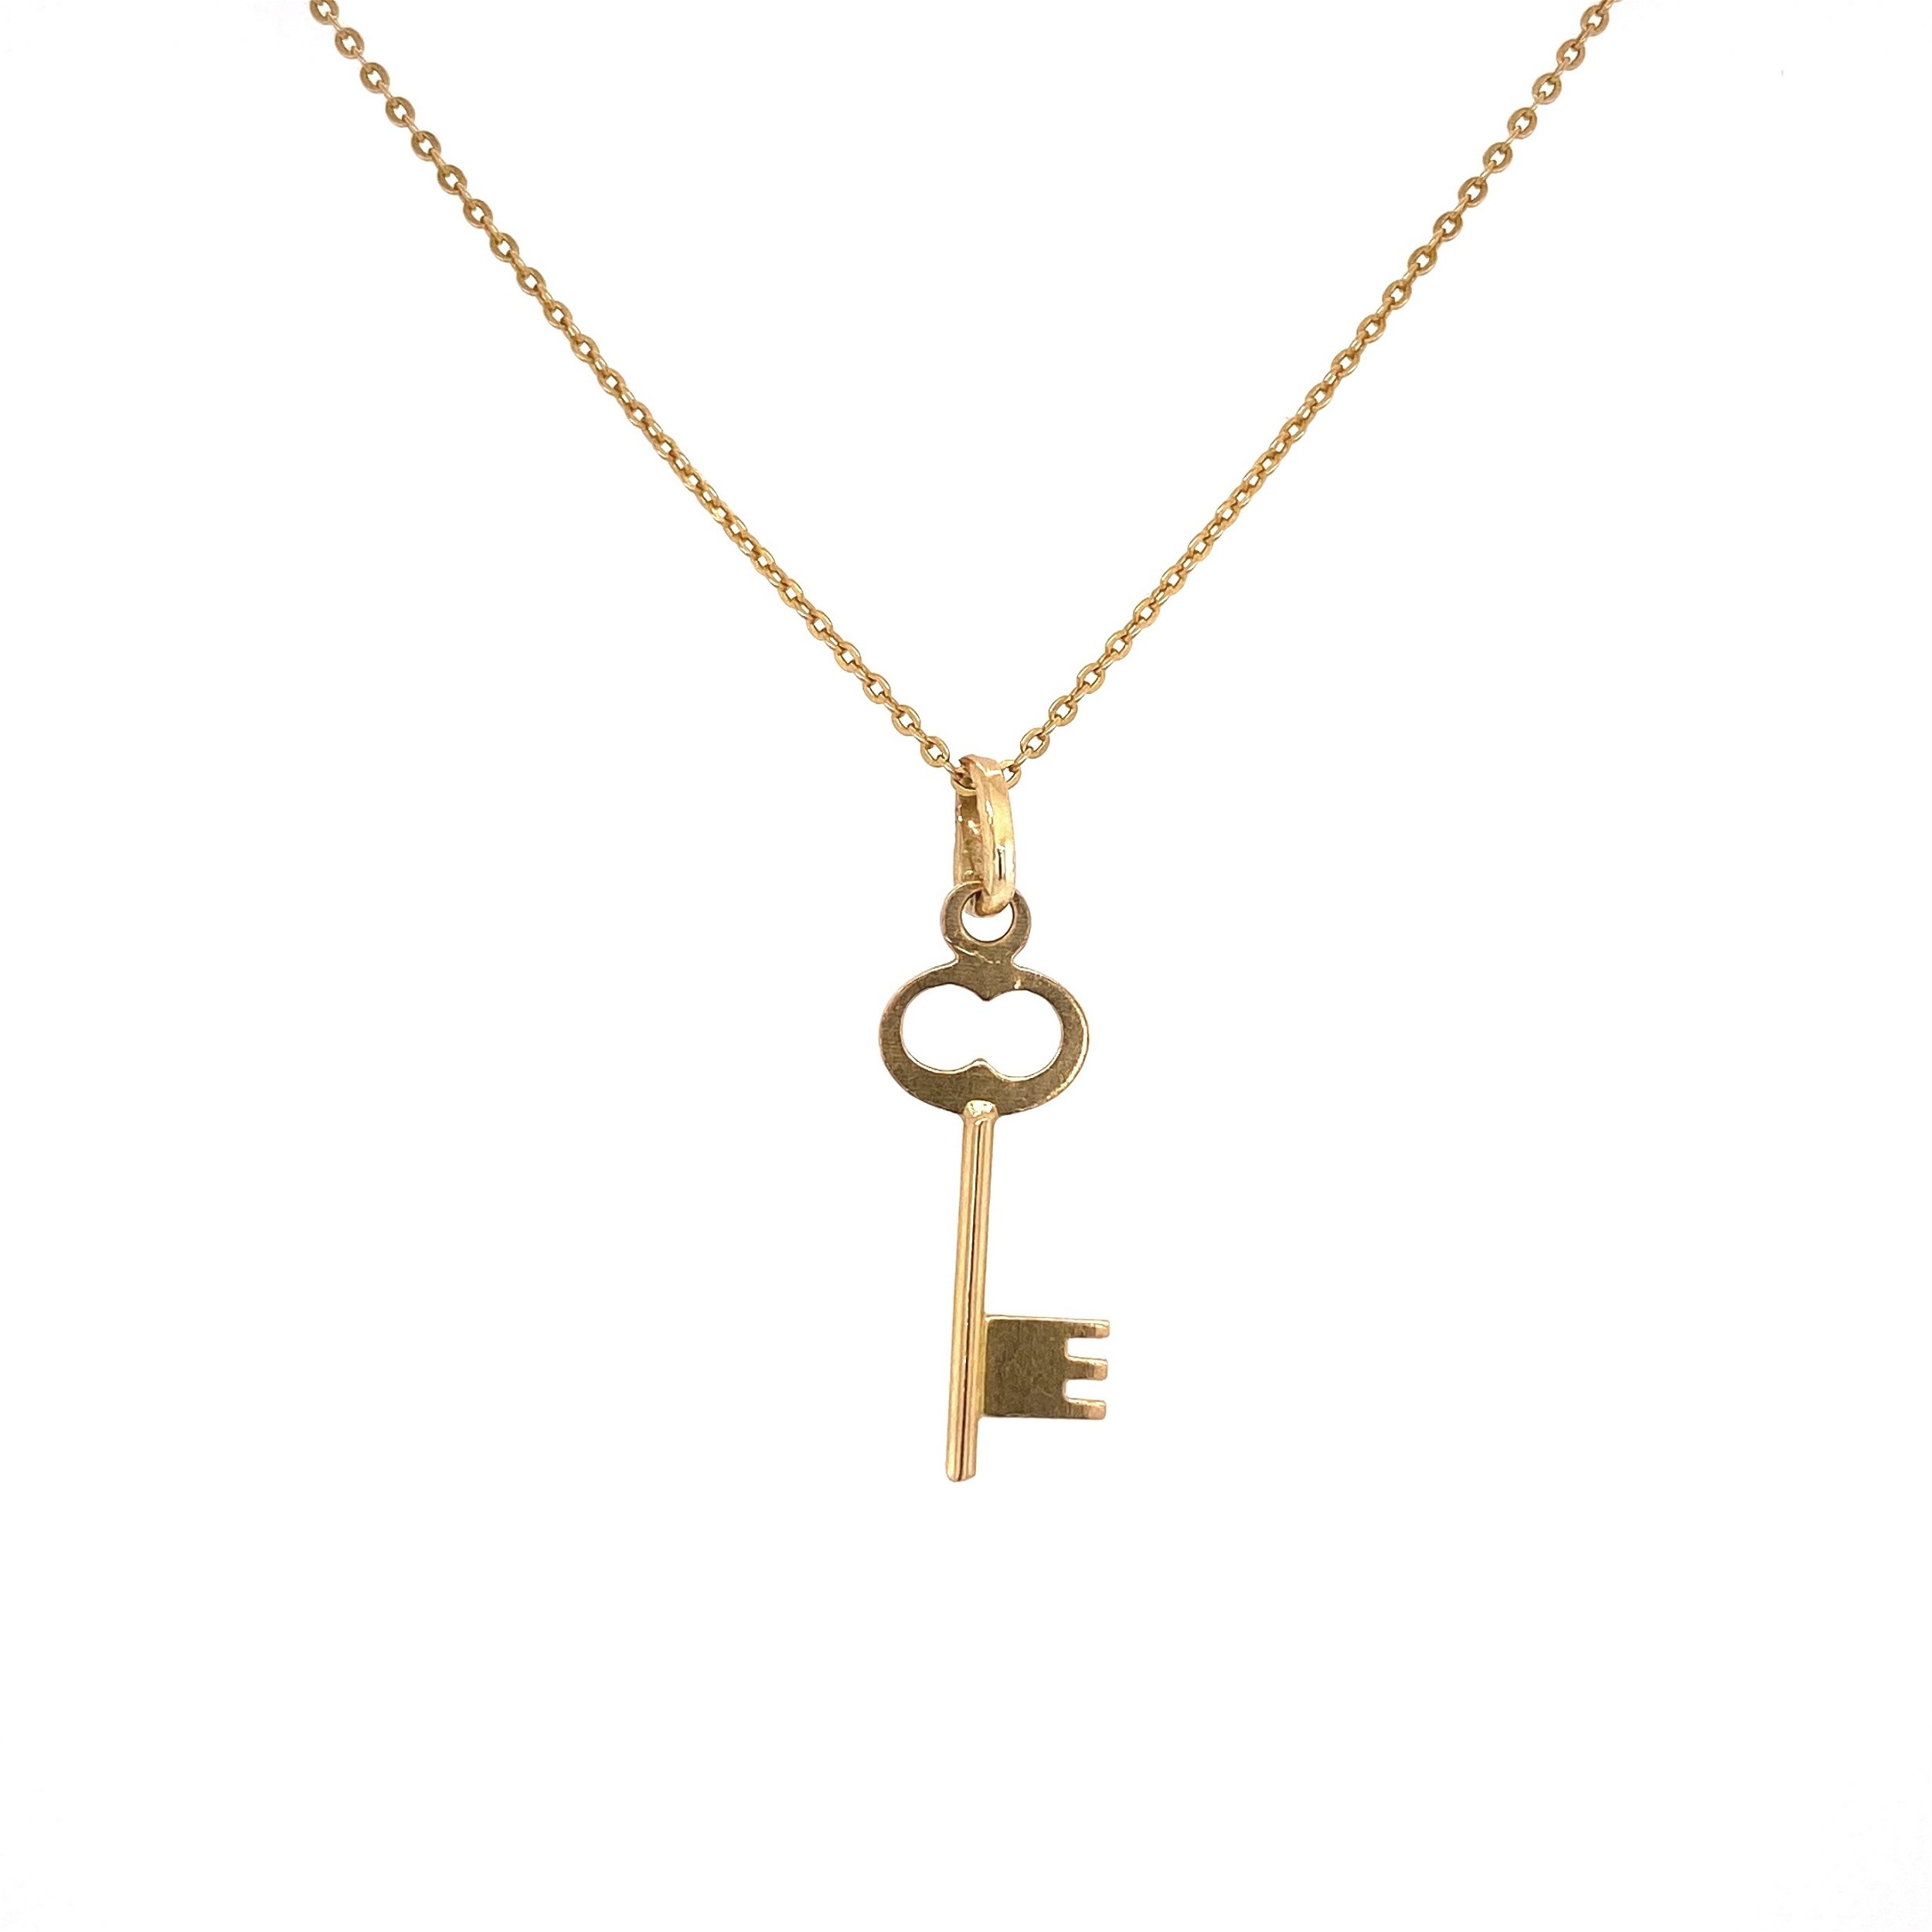 18K YG Italian Key Pendant on Necklace 3.1g, 21.5"